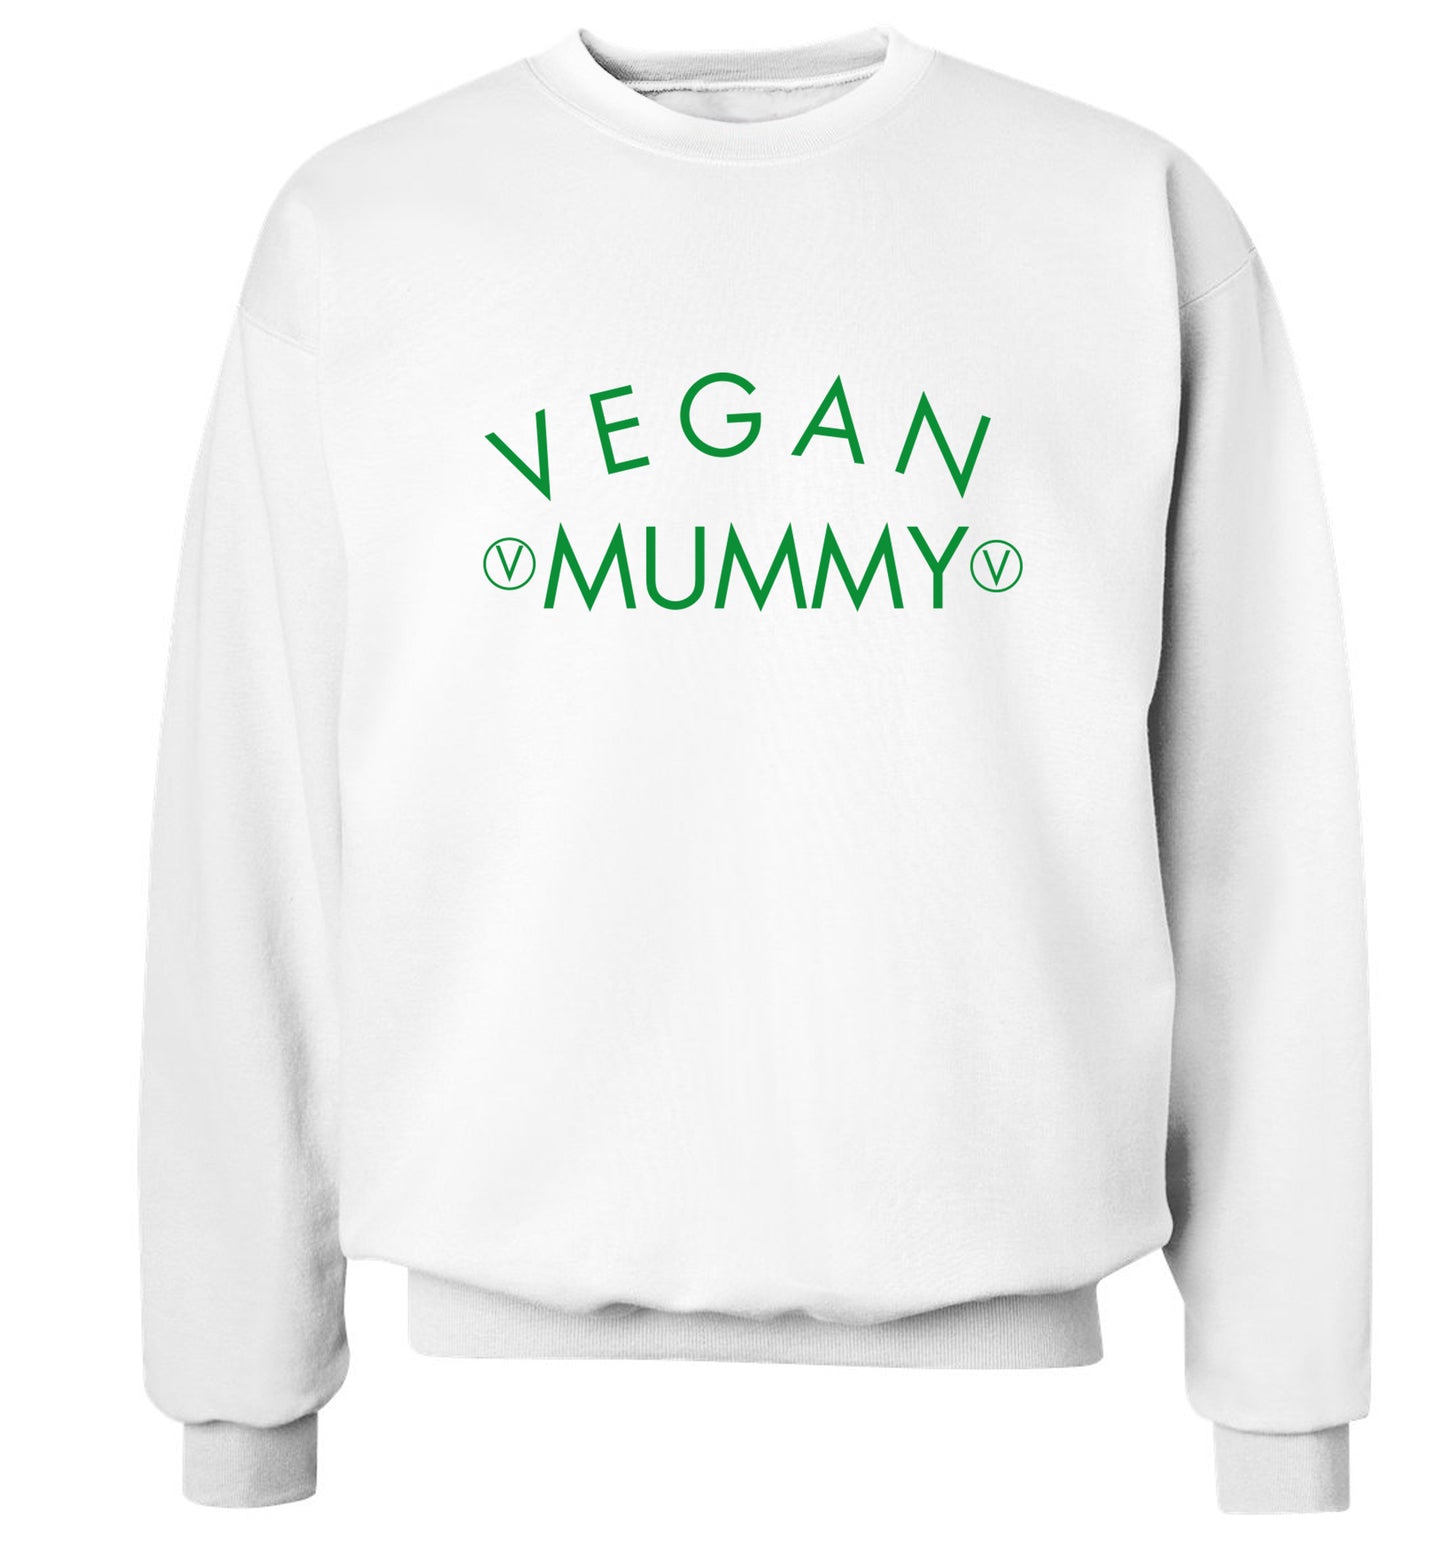 Vegan mummy Adult's unisex white Sweater 2XL